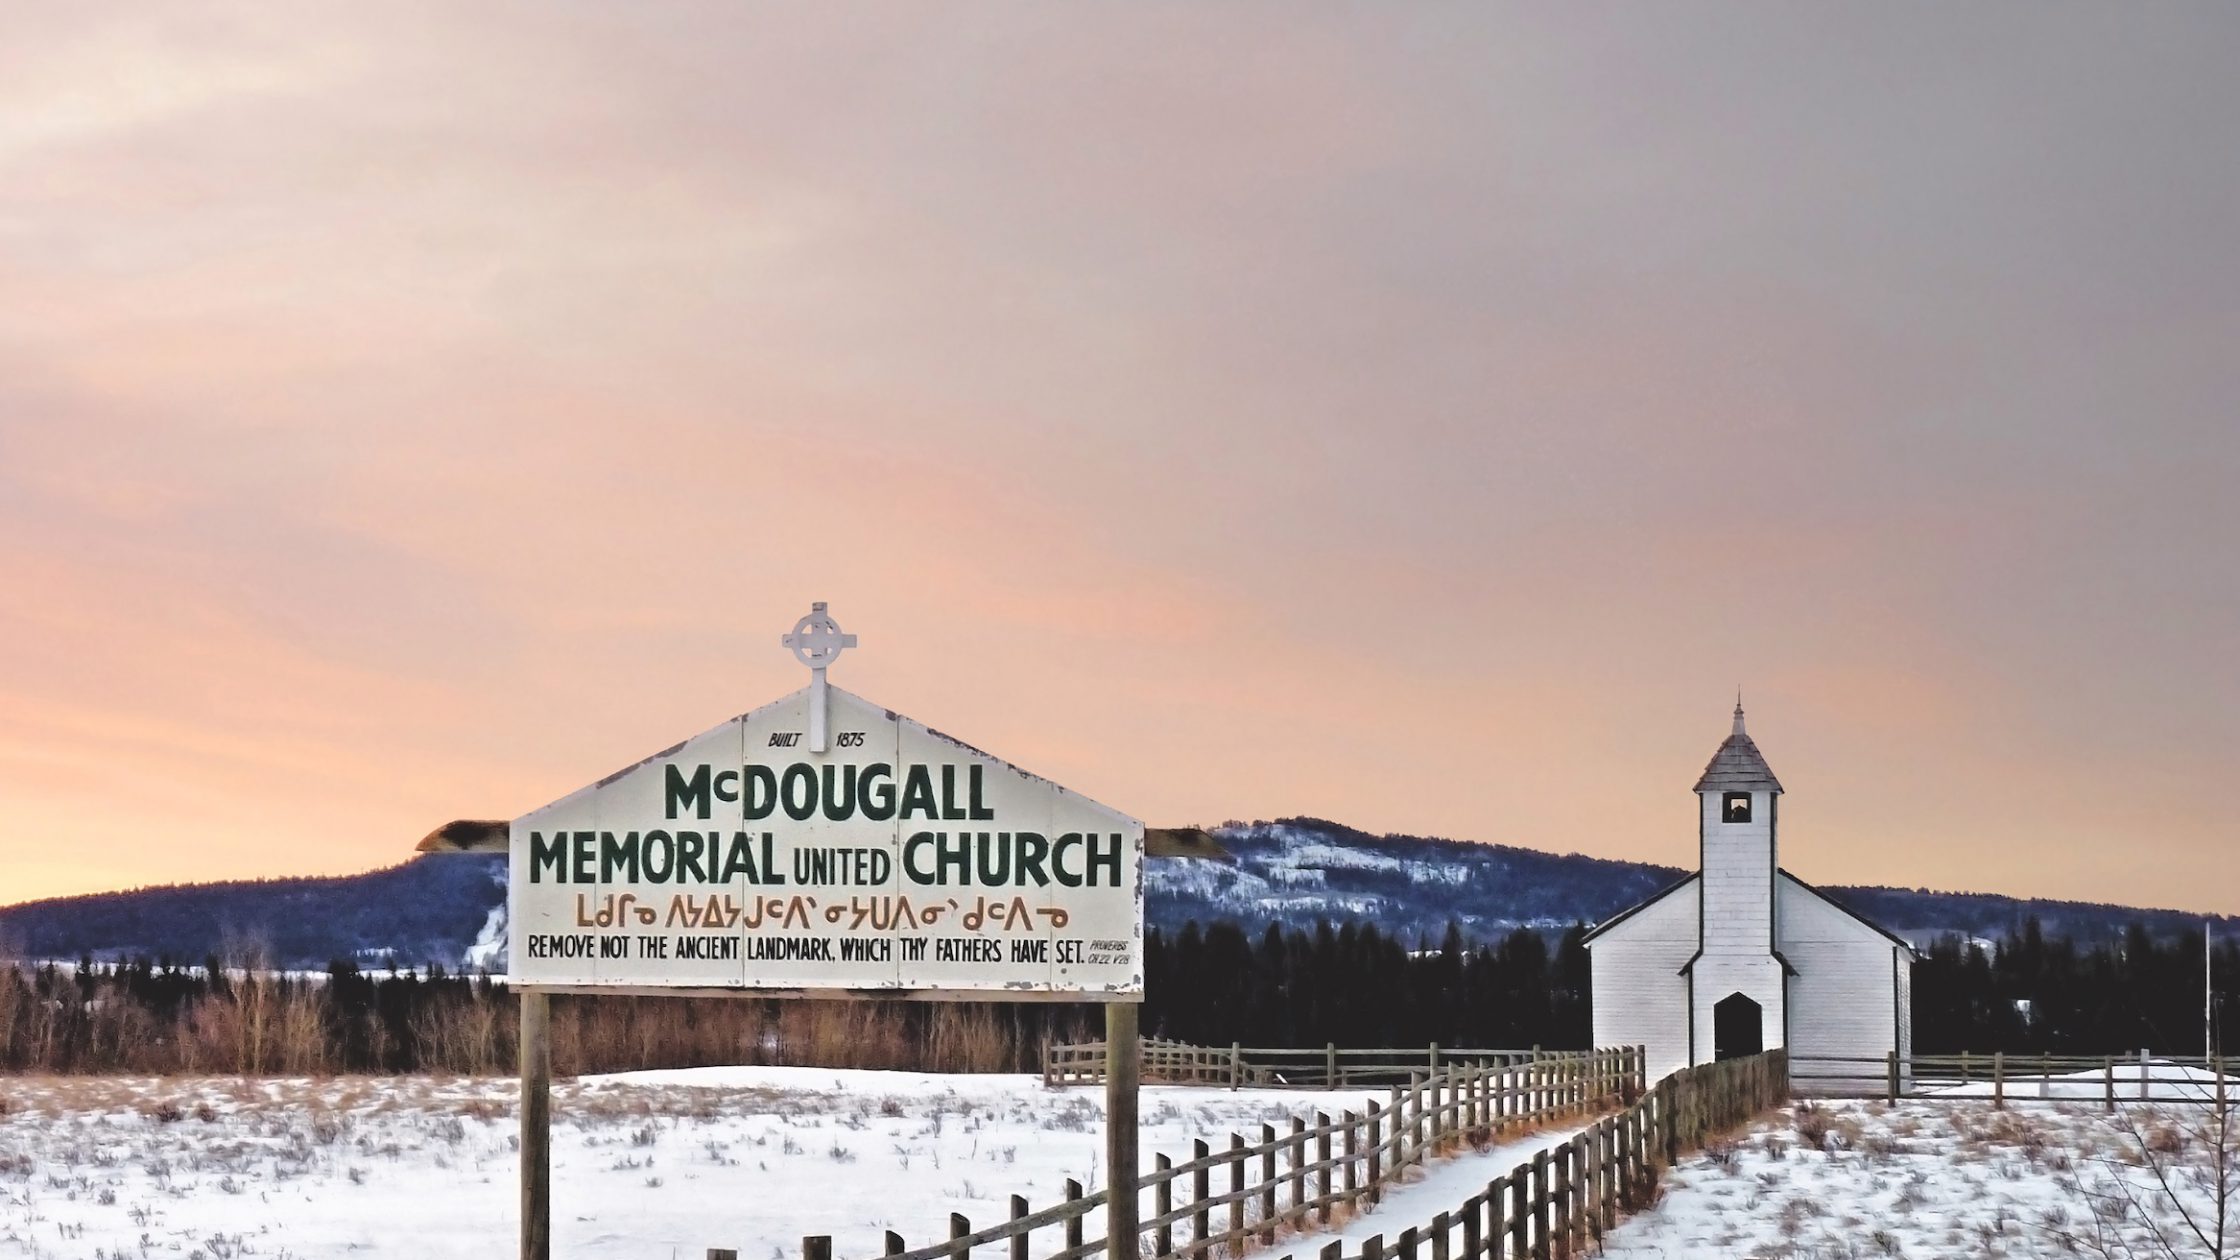 The original McDougall Memorial United Church